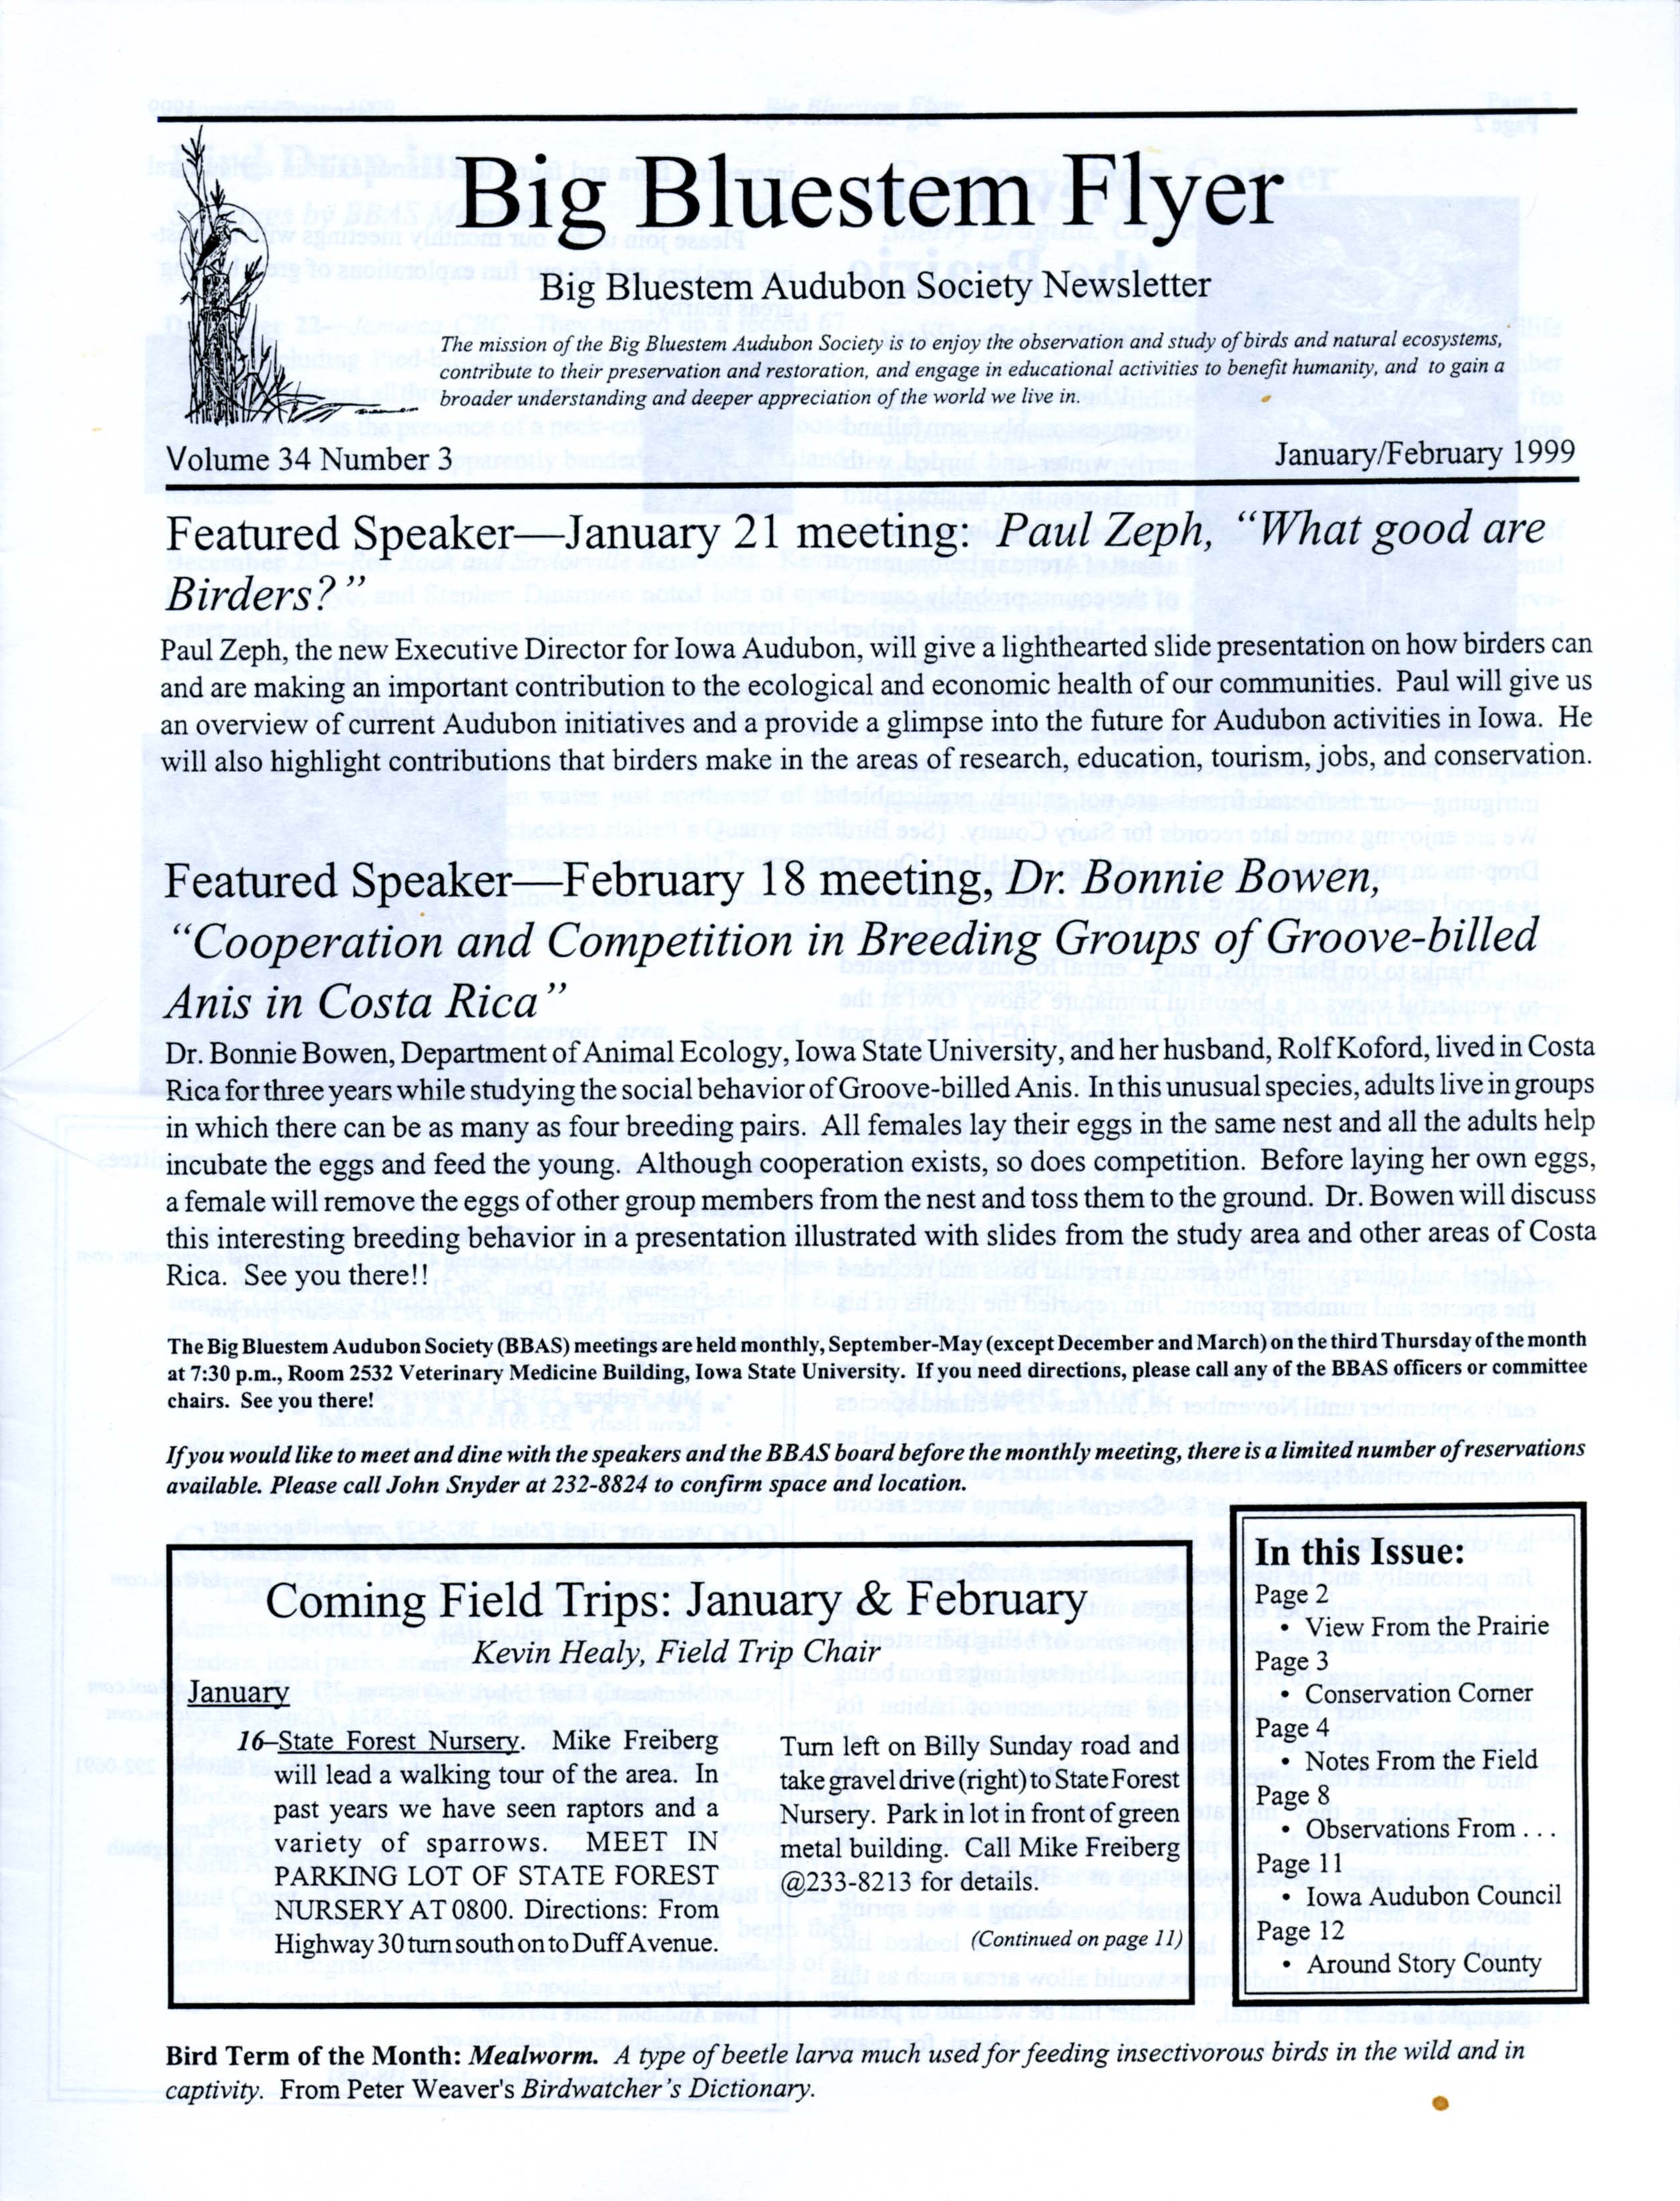 Big Bluestem Flyer, Volume 34, Number 3, January/February 1999